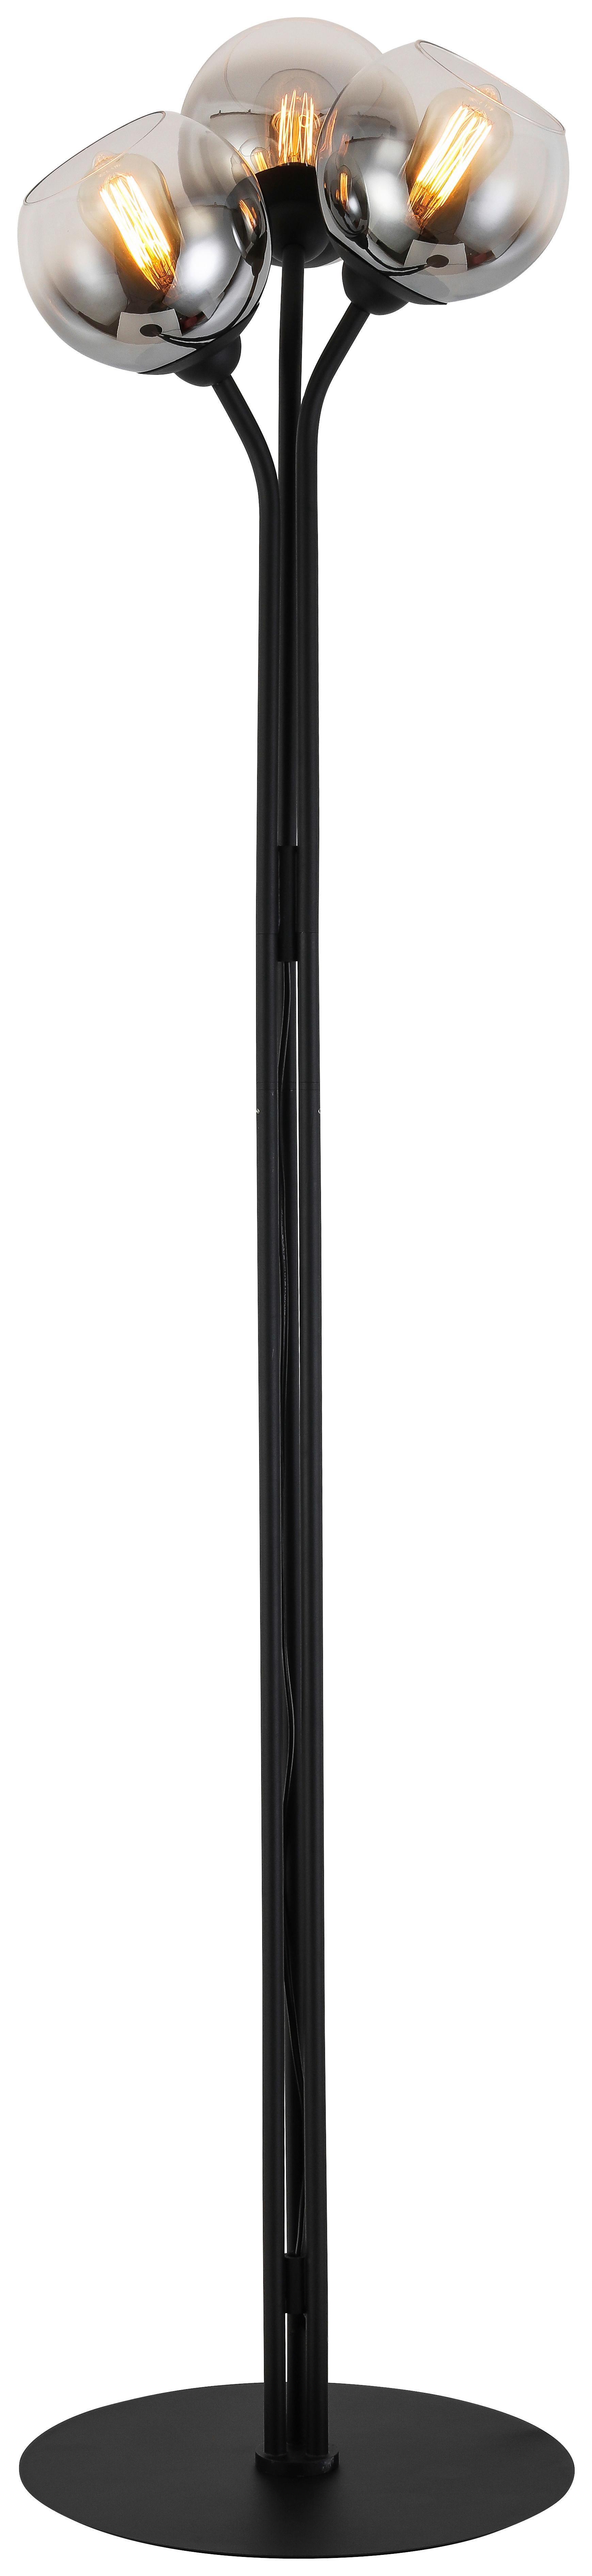 Állólámpa Kian - Króm/Fekete, modern, Üveg/Fém (42/165cm) - Visiona